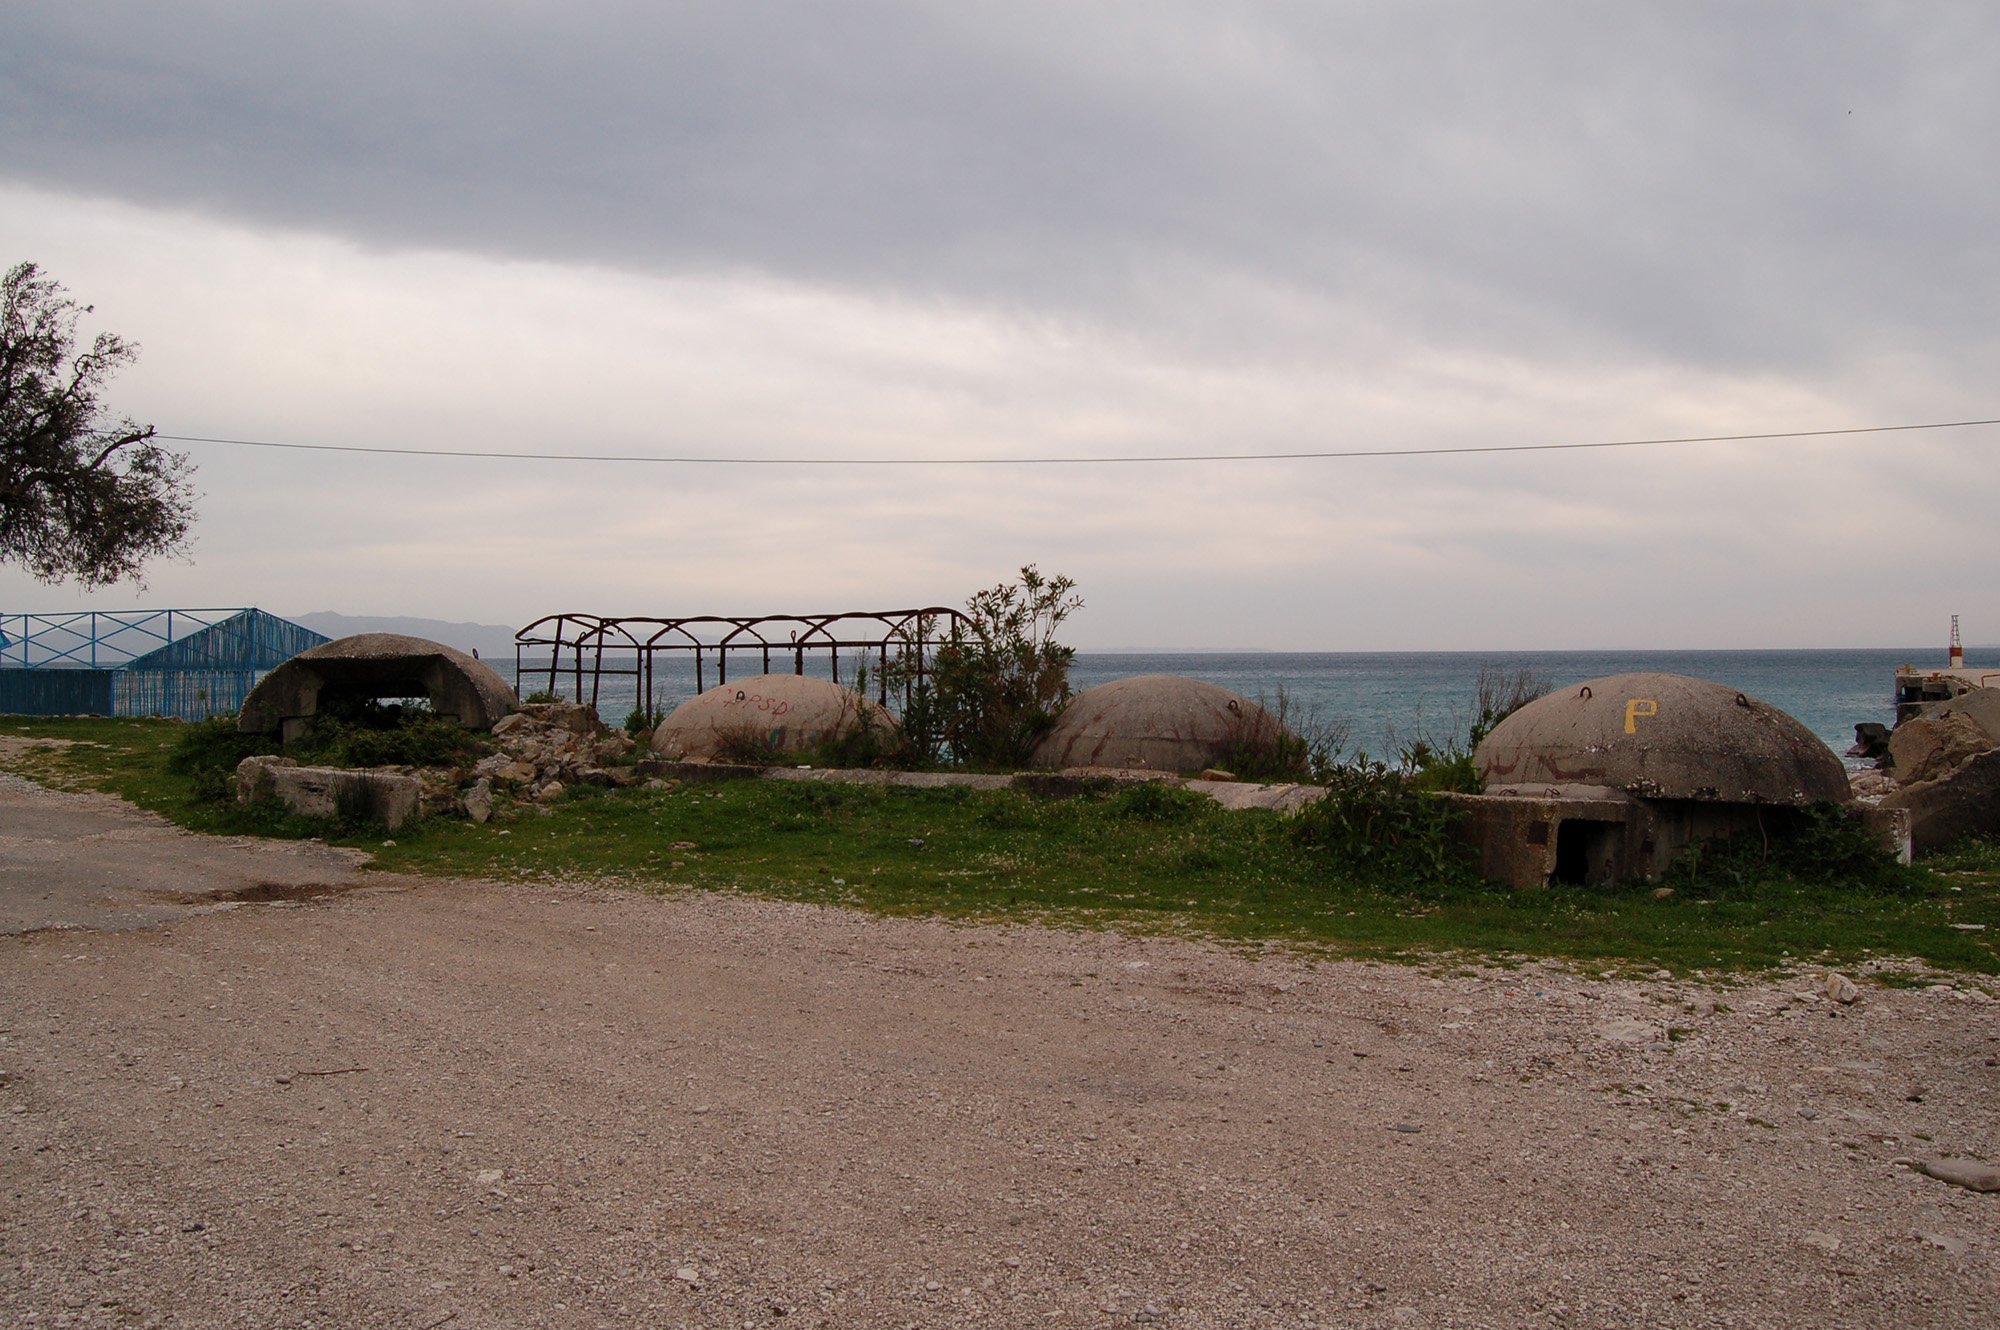 Enver Hoxha's bunkers - 2 